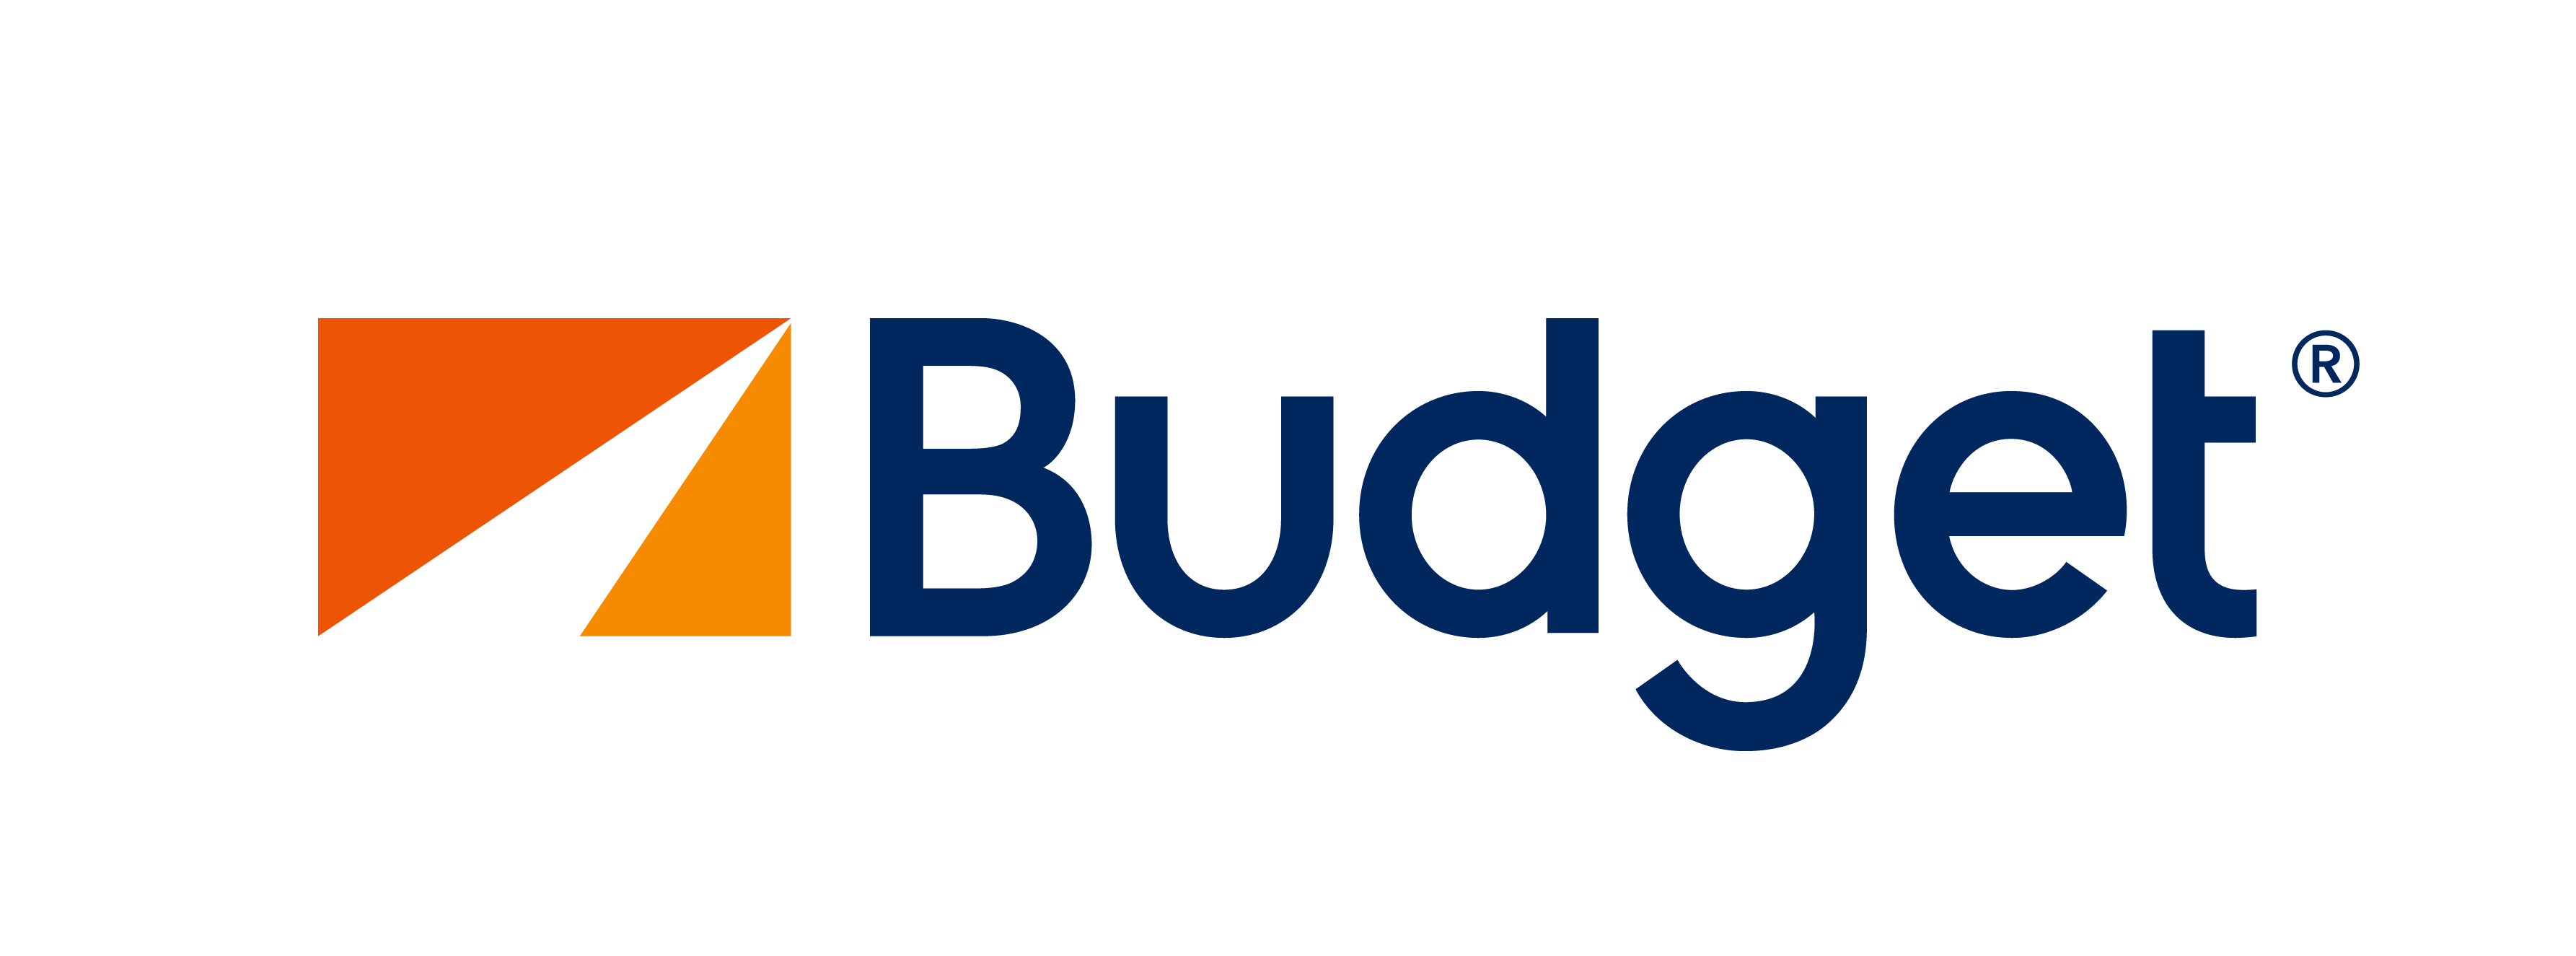 Budget PNG Image